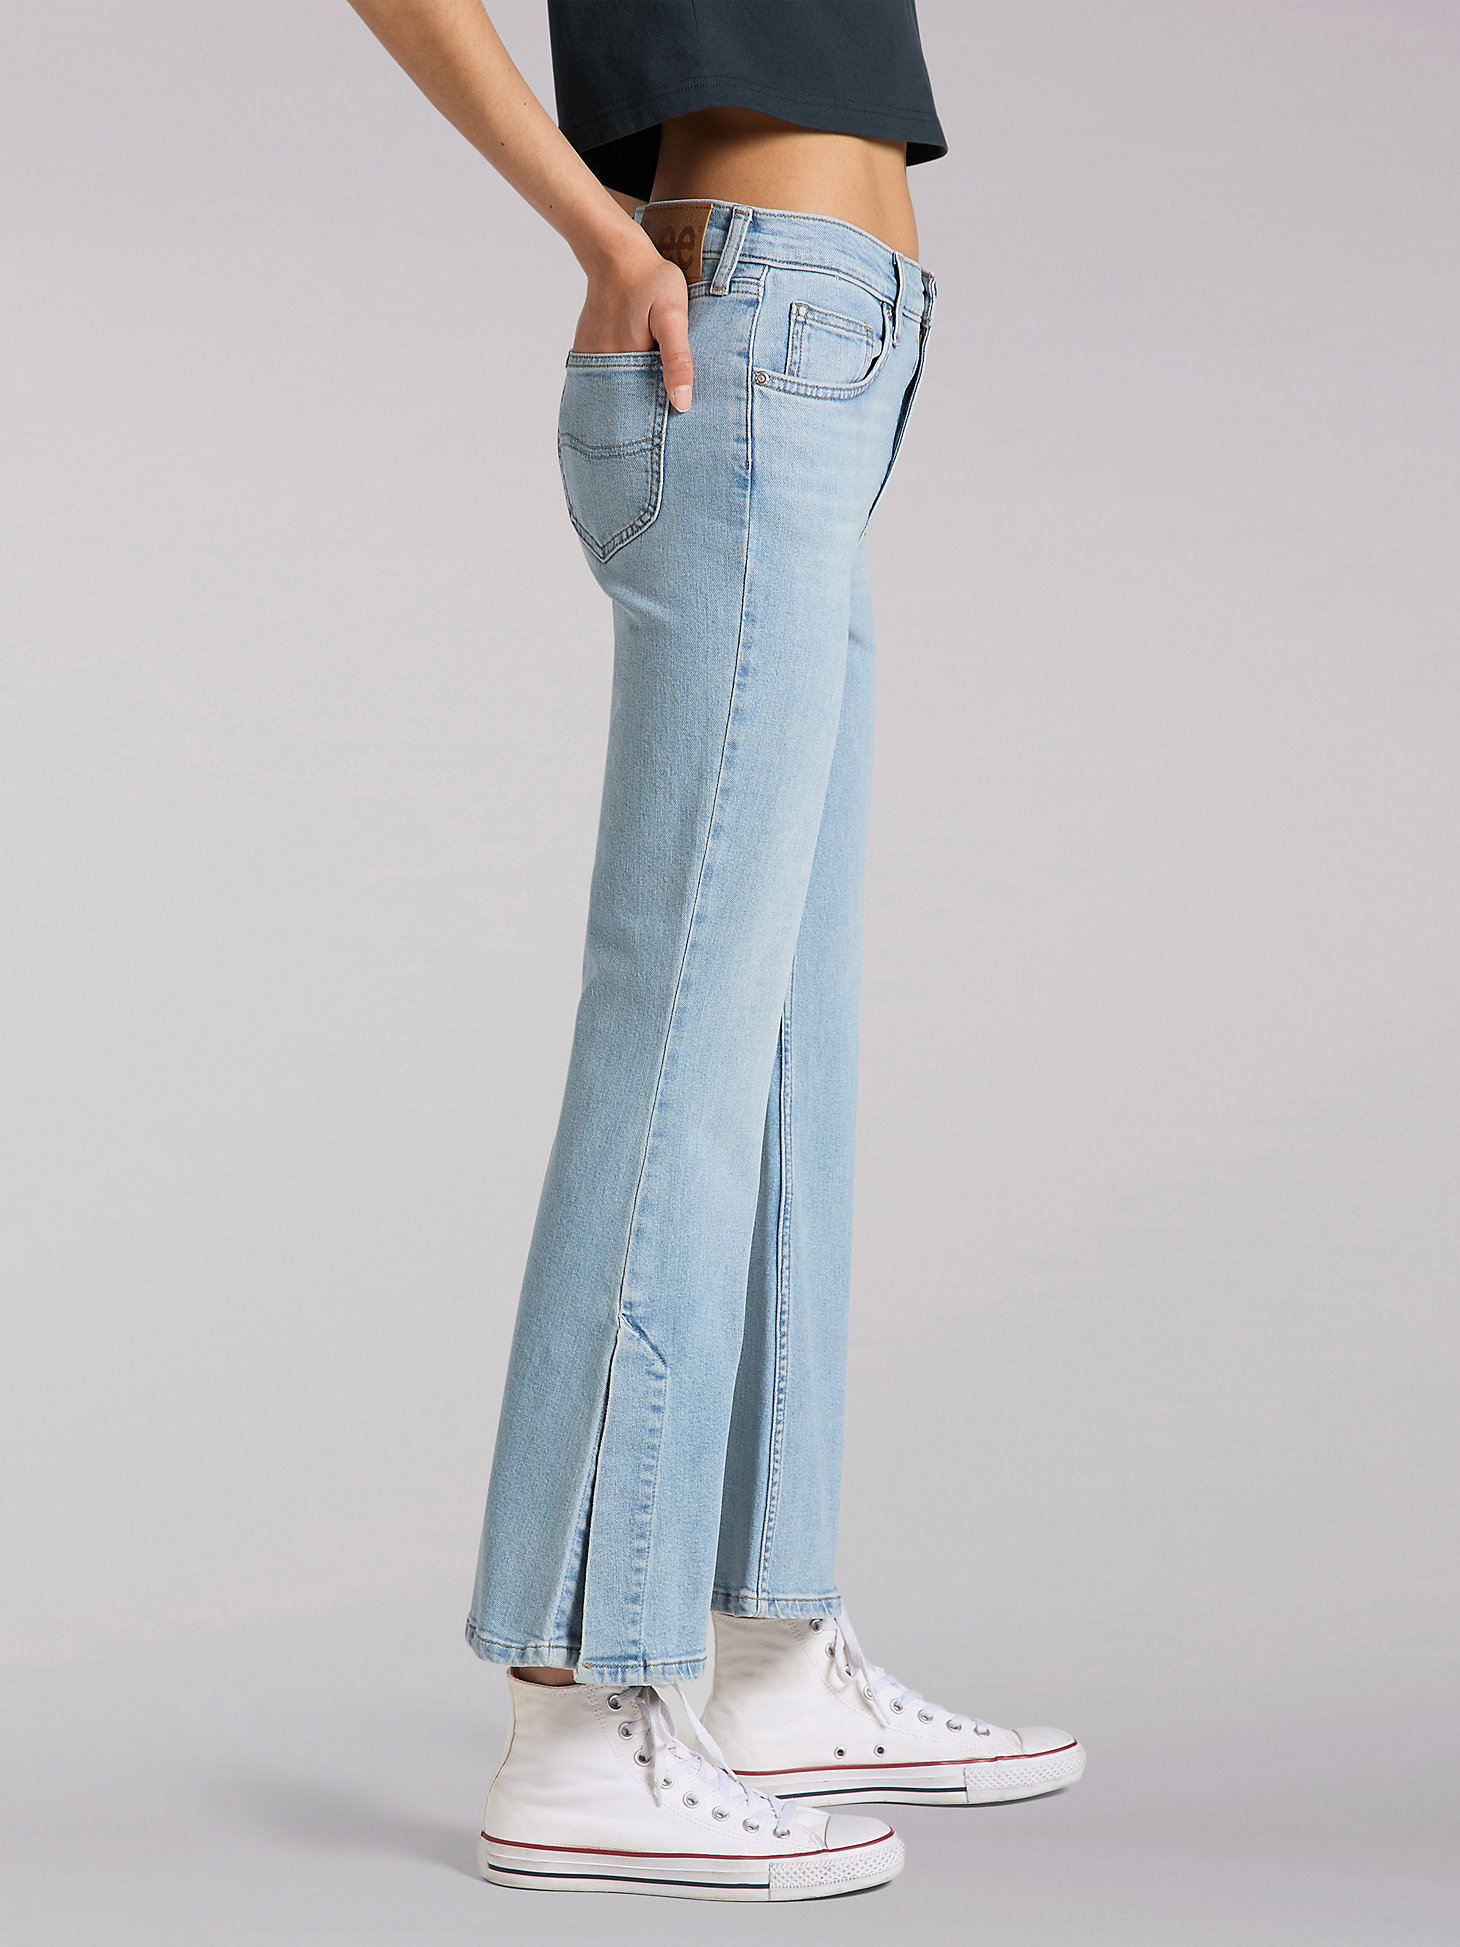 Women's Lee European Collection High Rise Split Flare Jean in Sunbleach alternative view 2